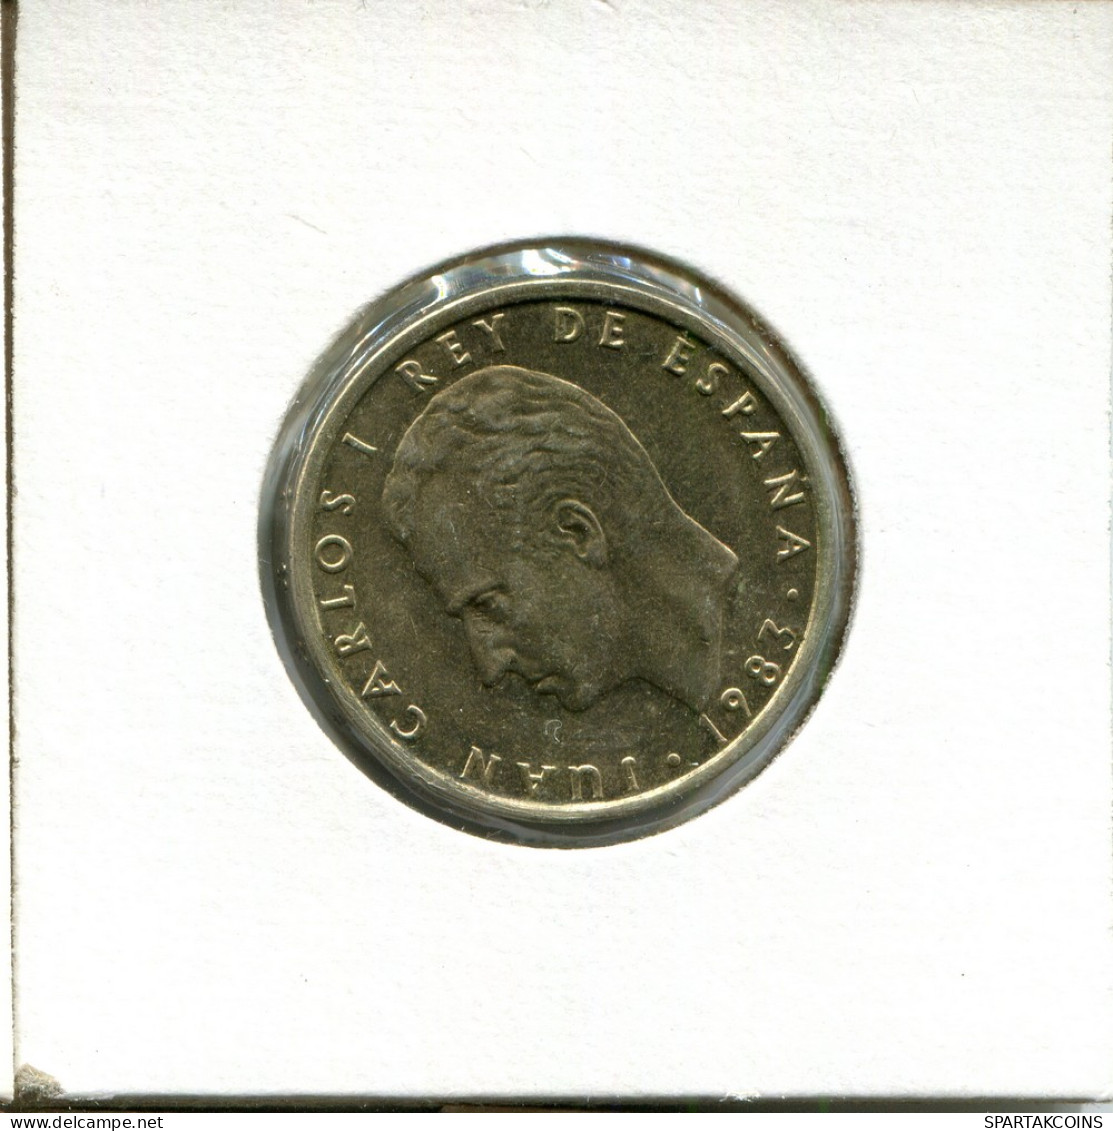 100 PESETAS 1983 SPAIN Coin #AT930.U - 100 Pesetas